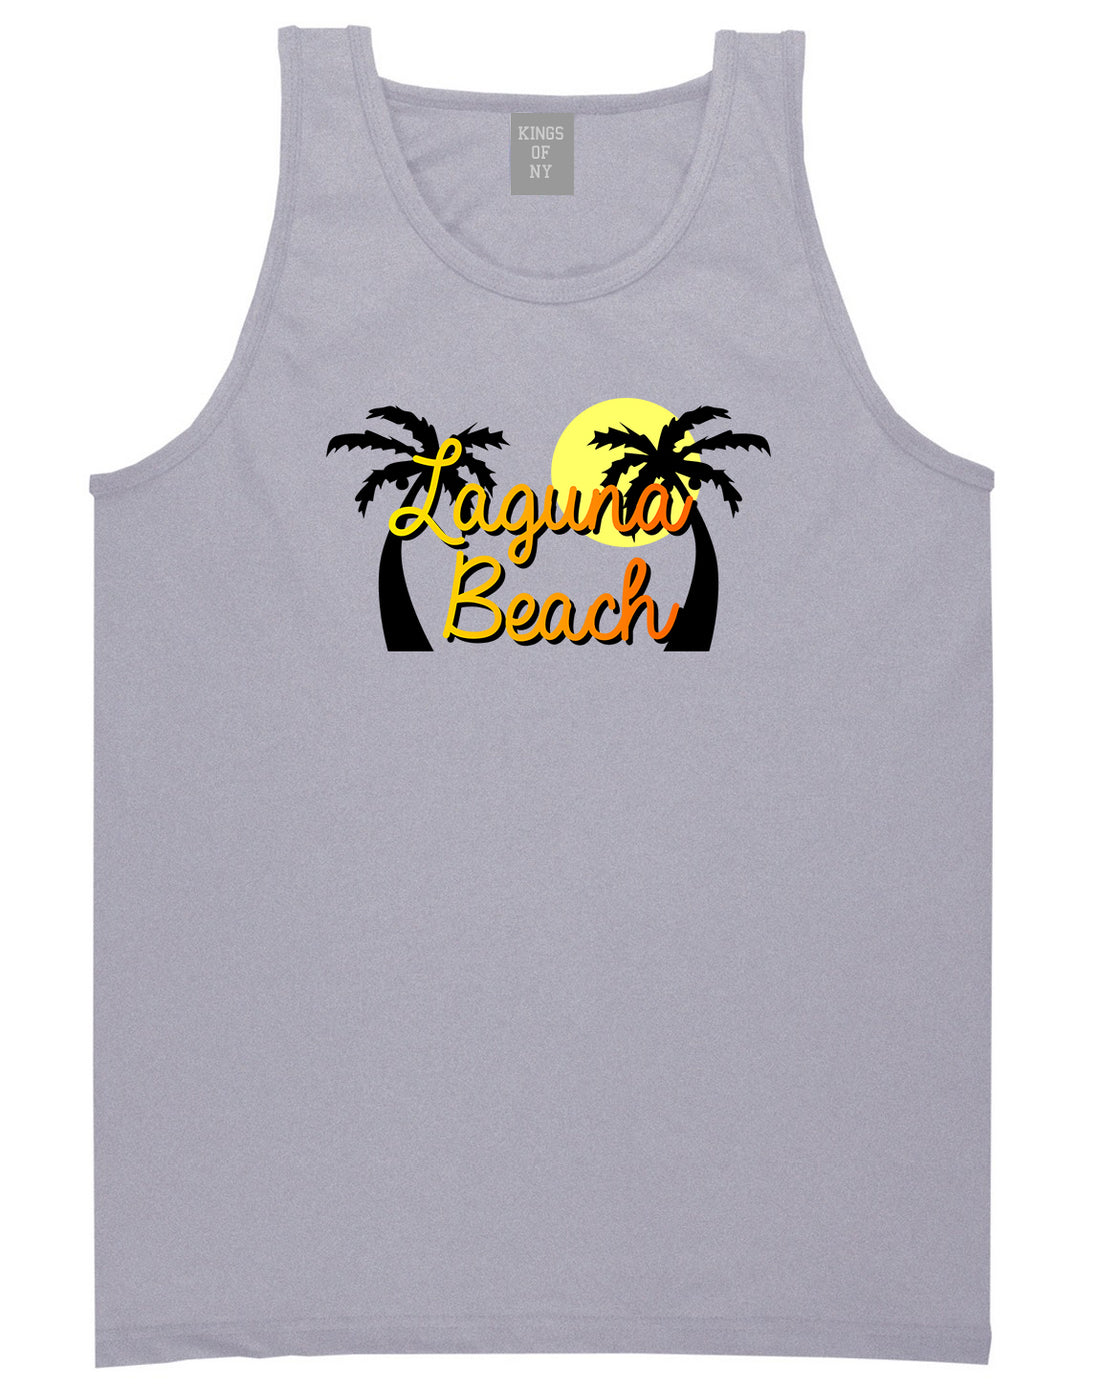 Laguna Beach California Mens Tank Top Shirt Grey by Kings Of NY